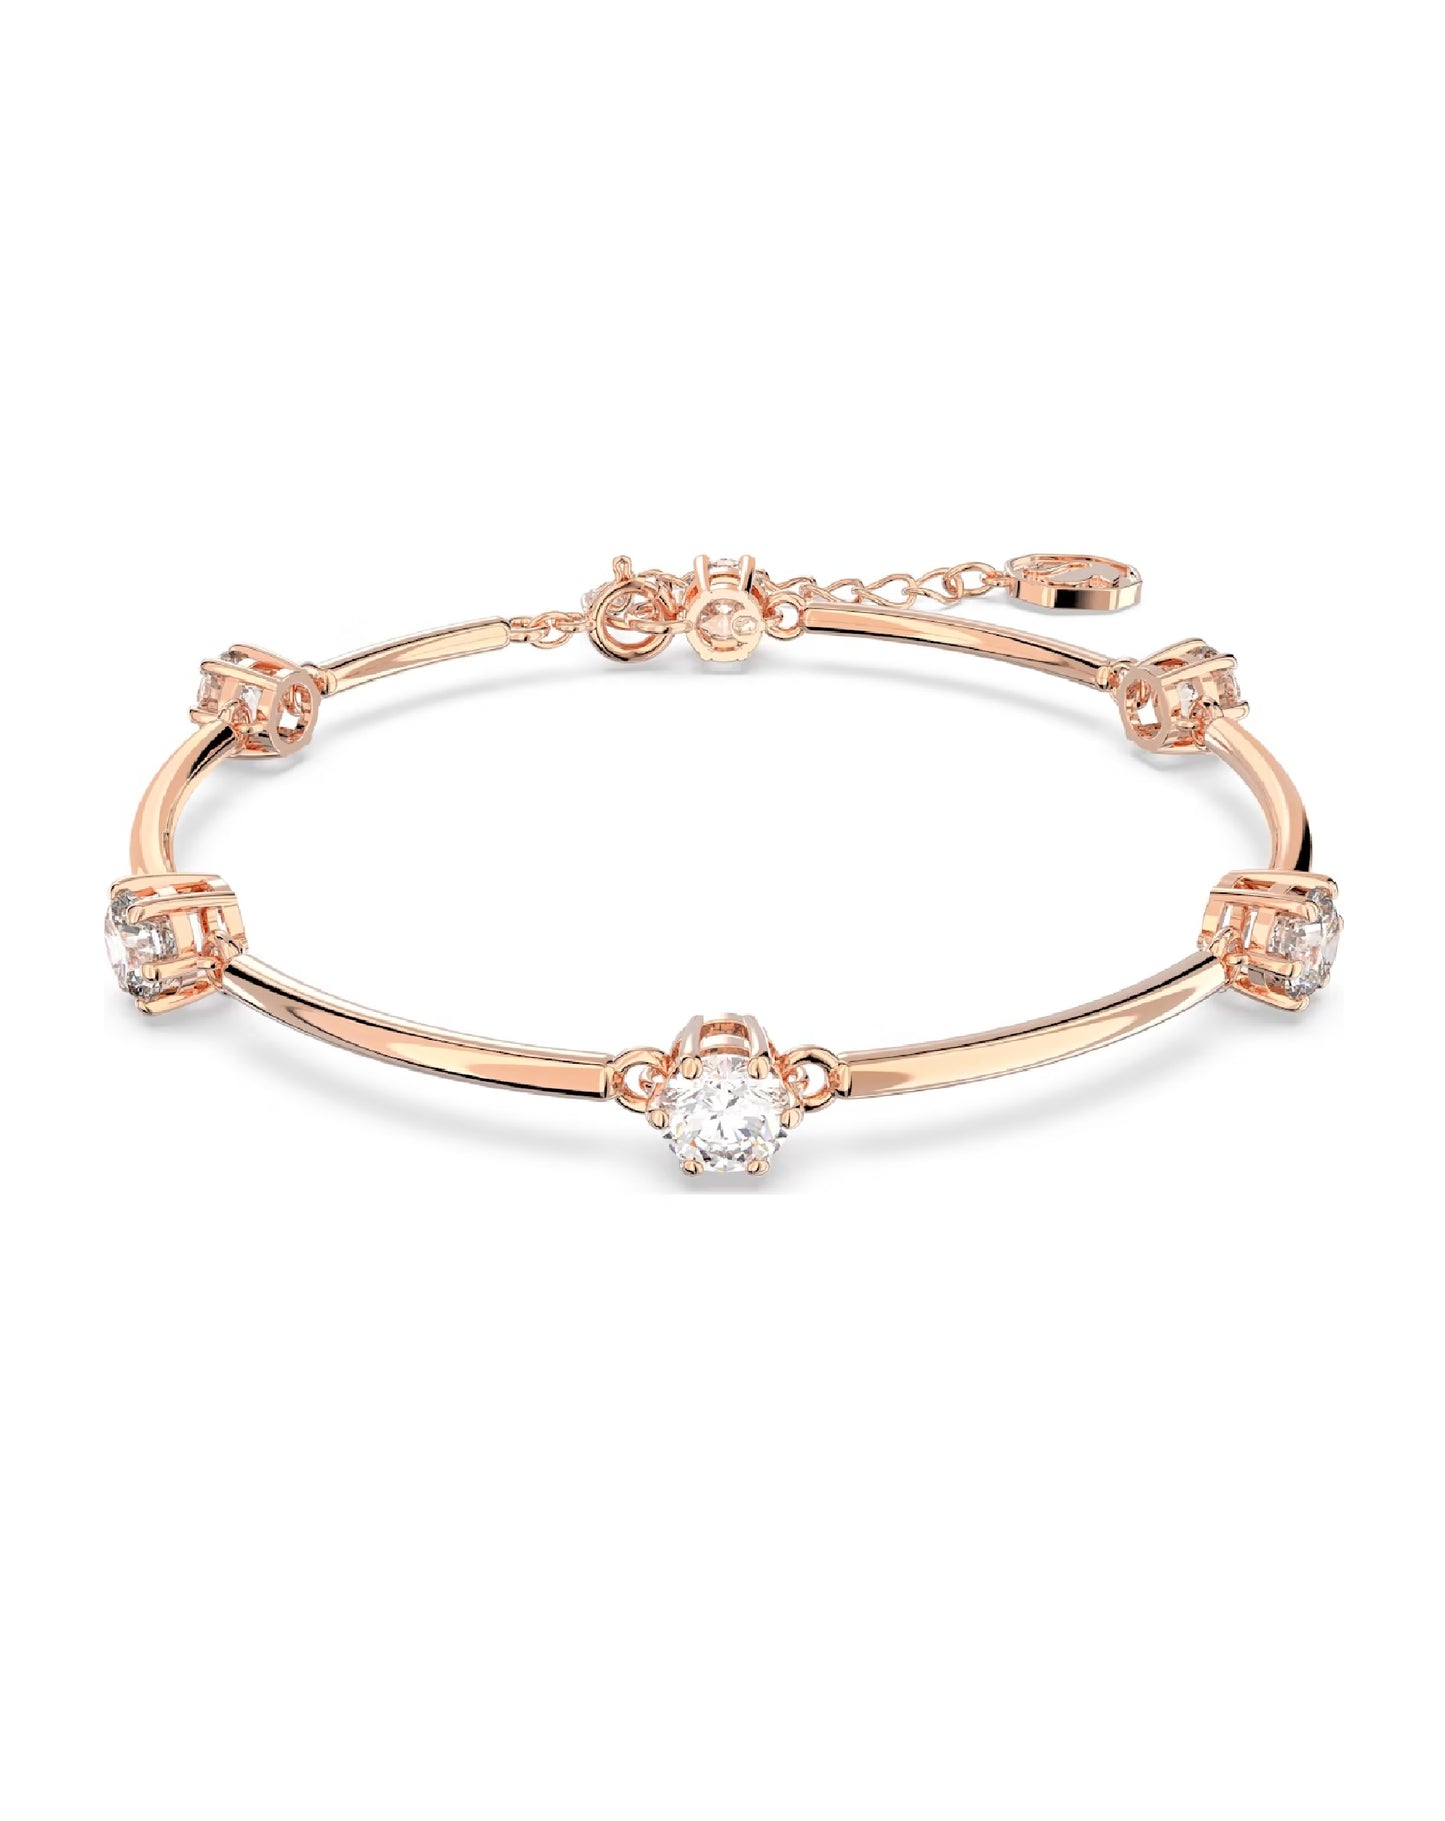 Swarovski 5654495 Swarovski Constella BANGLE Size M, Rose/Pink Gold Tone Bracelets